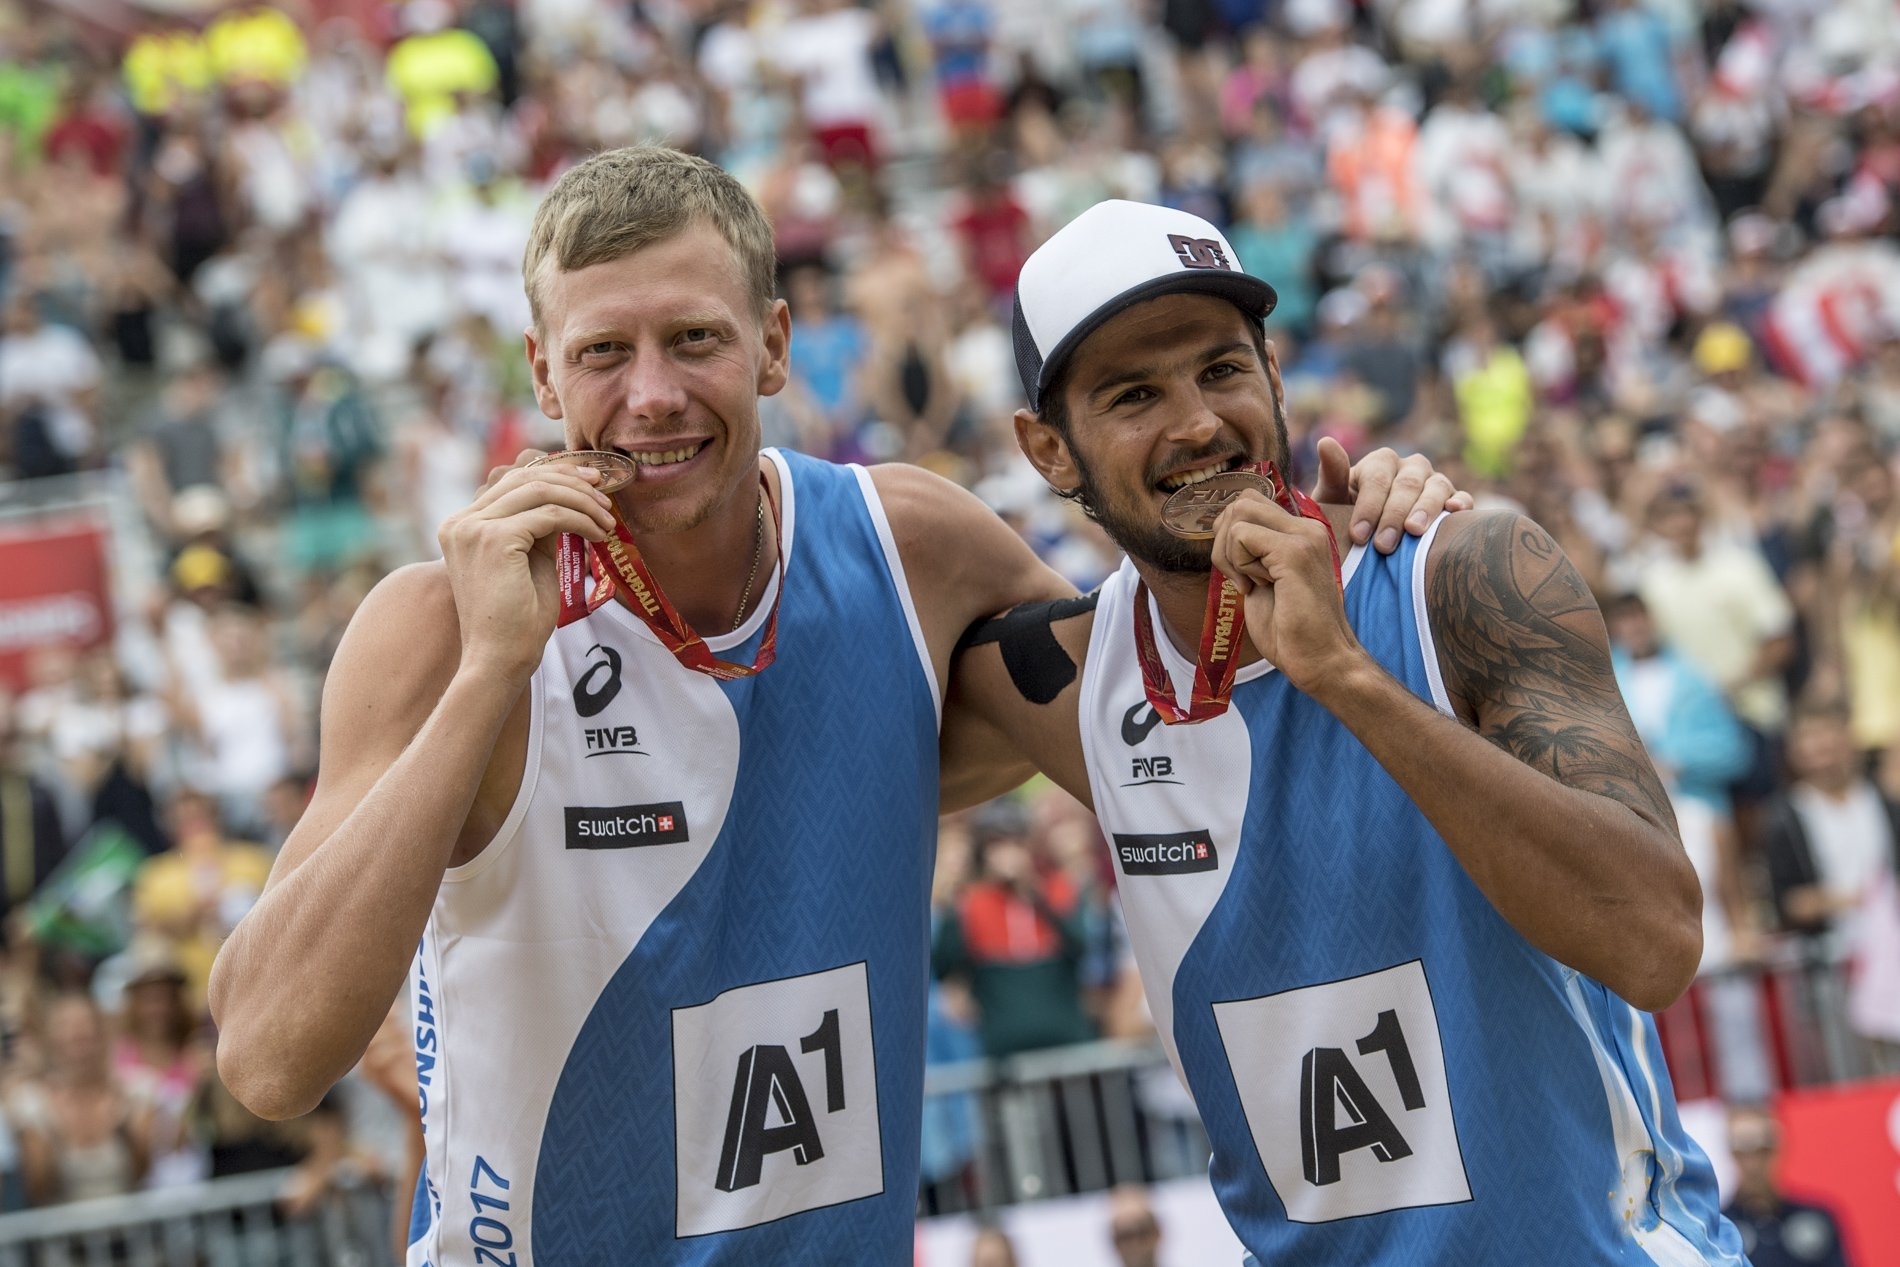 Nikita and Viacheslav won bronze at the World Championships in Vienna